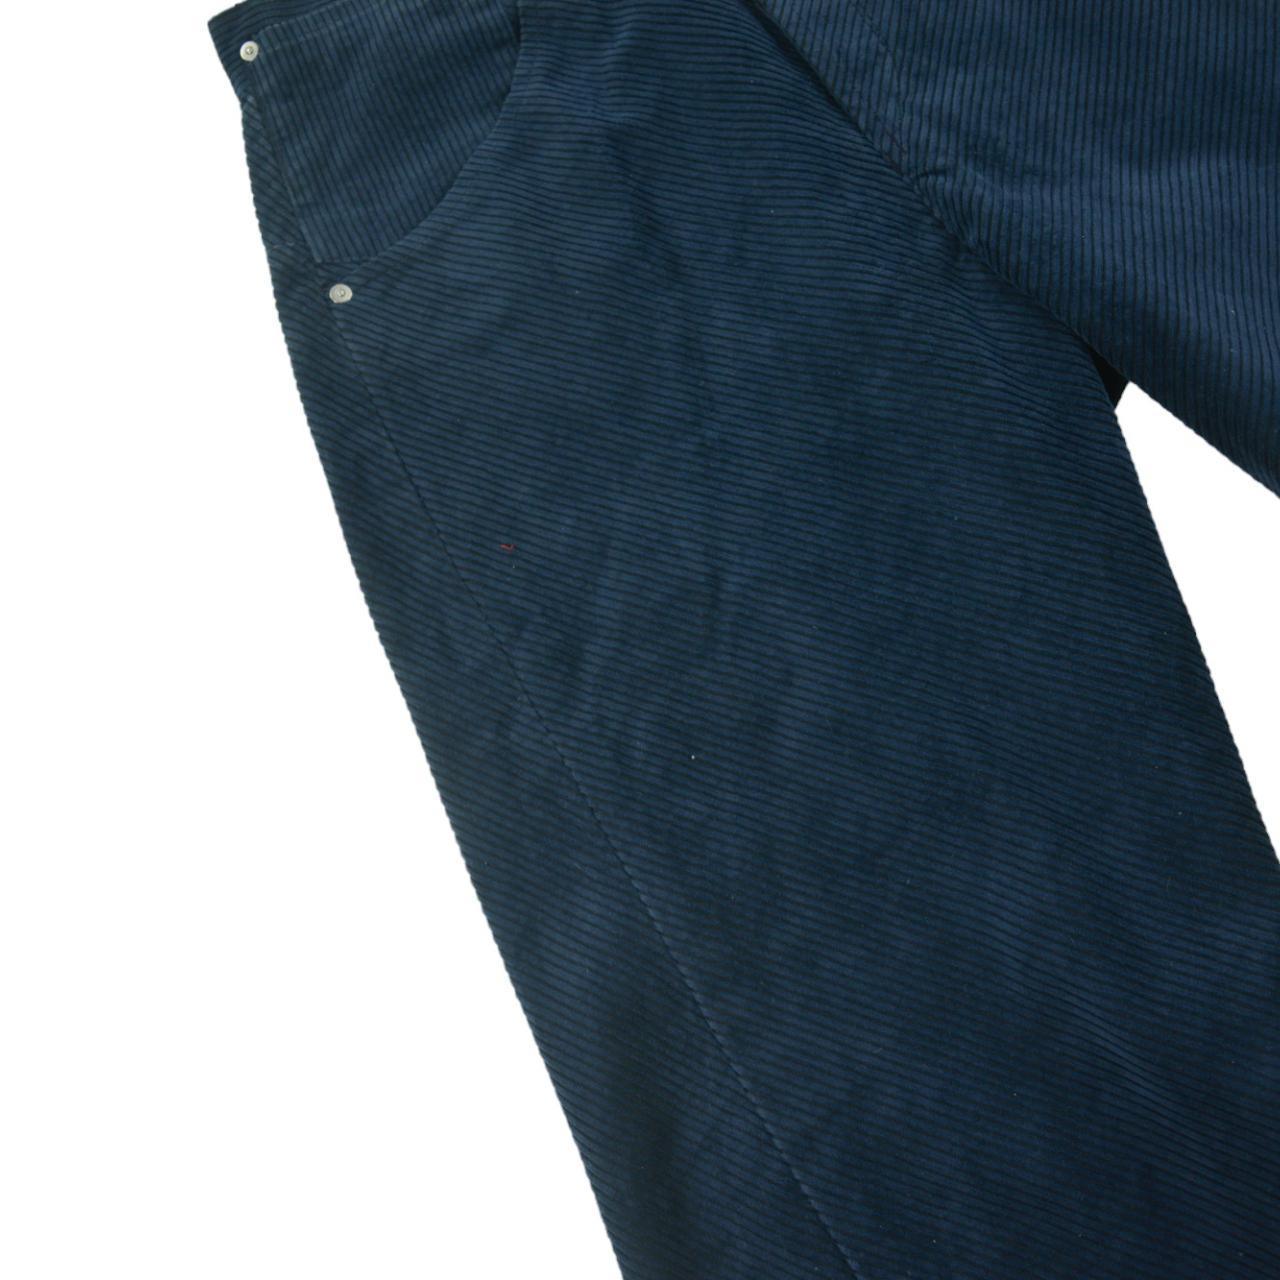 Vintage Levi's Diagonal Seam Corduroy Trousers Size W32 - Known Source